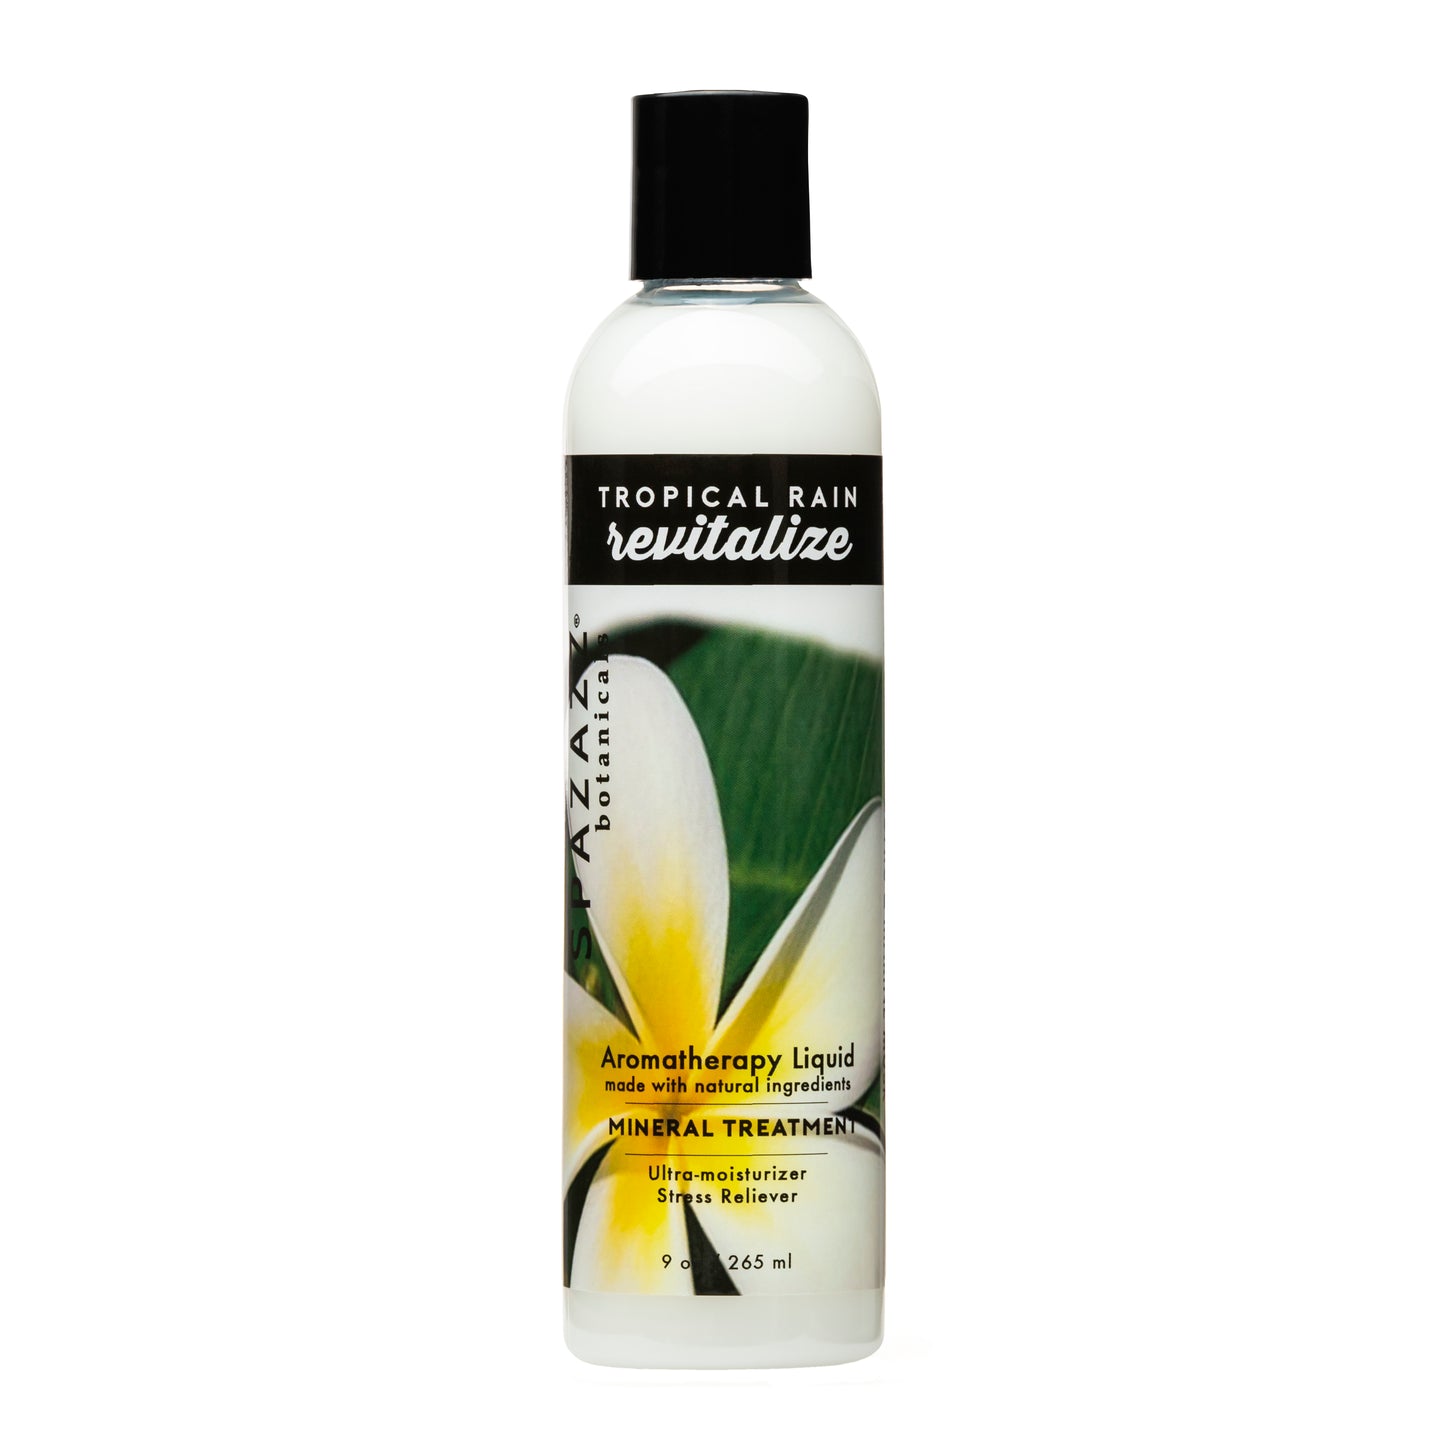 Tropical Rain - Revitalize 9oz Aromatherapy Elixir